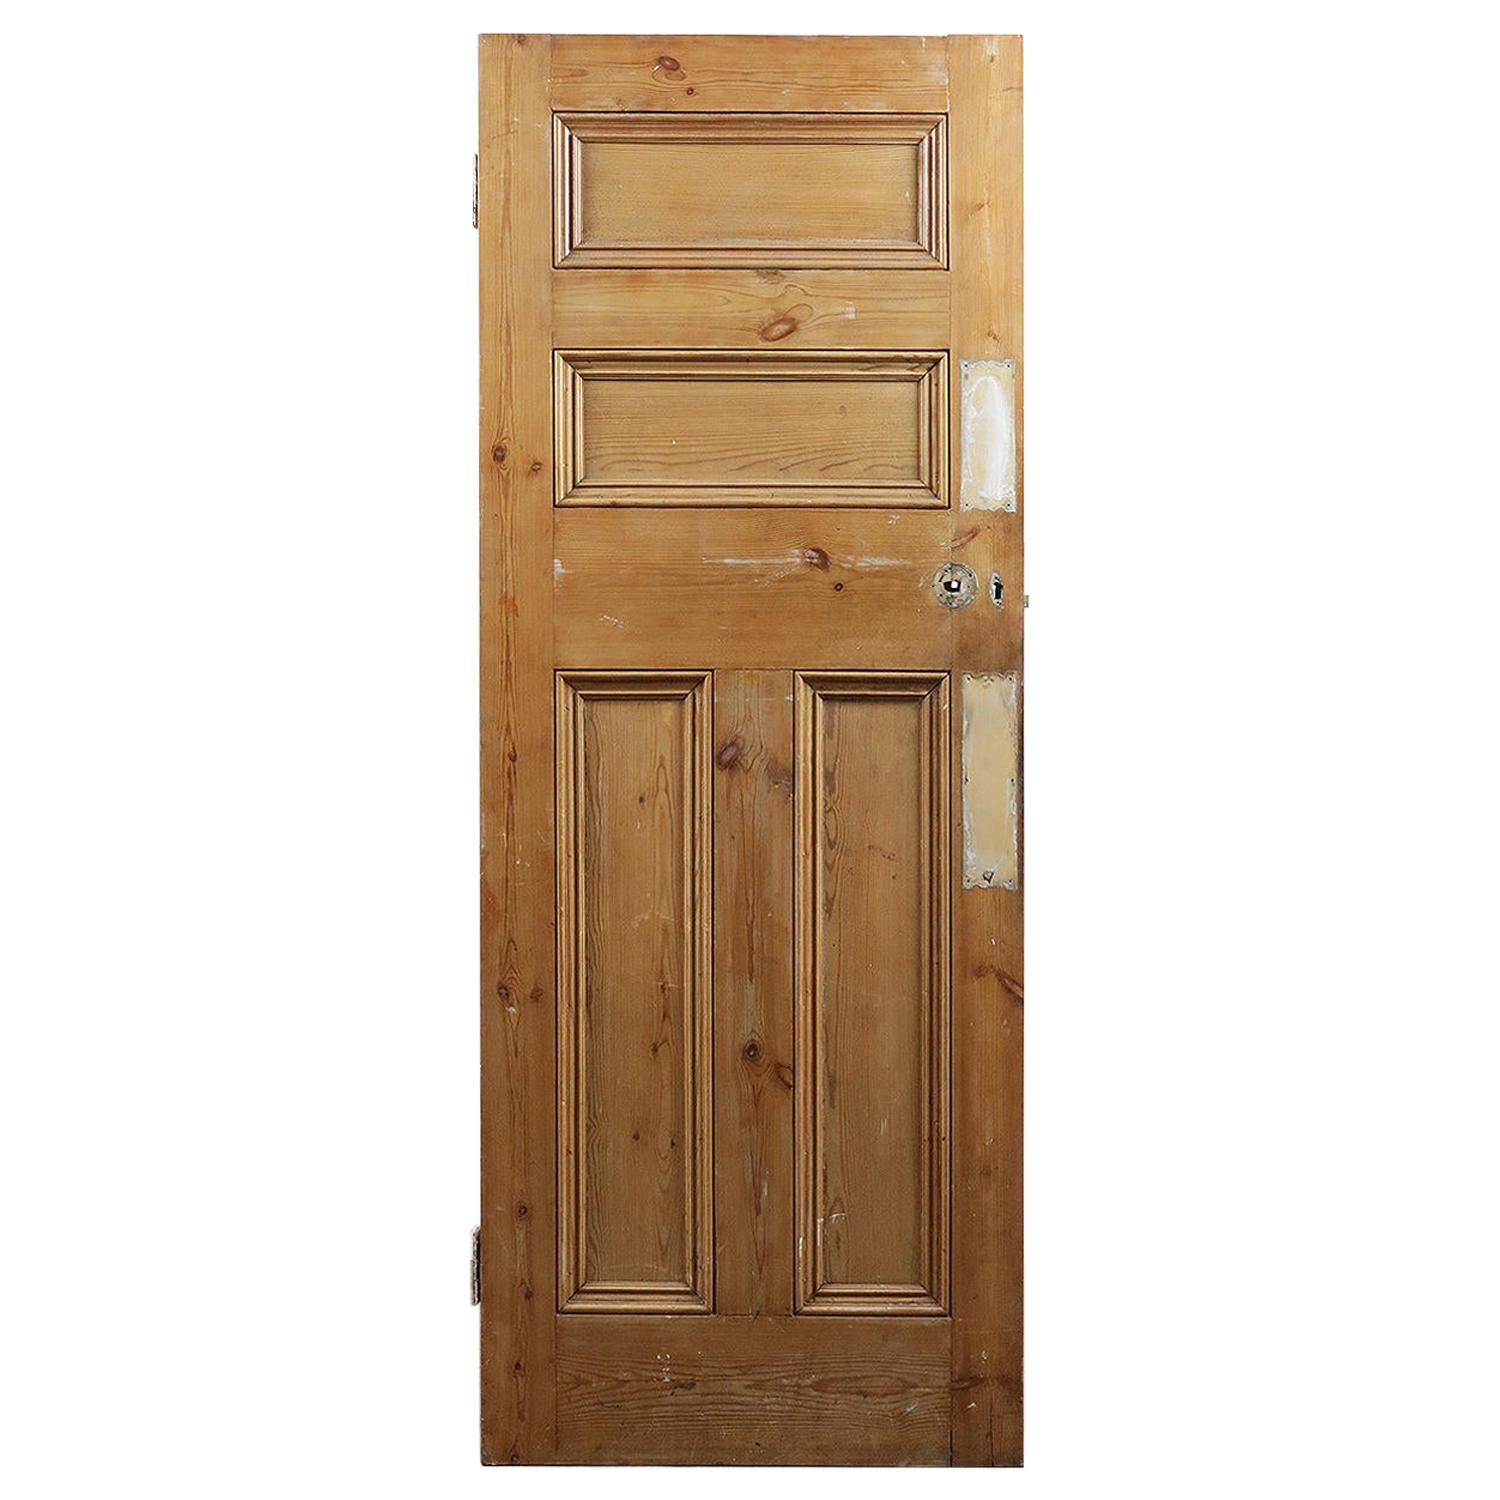 Reclaimed Four Beaded Panel Pine Door, 20th Century For Sale